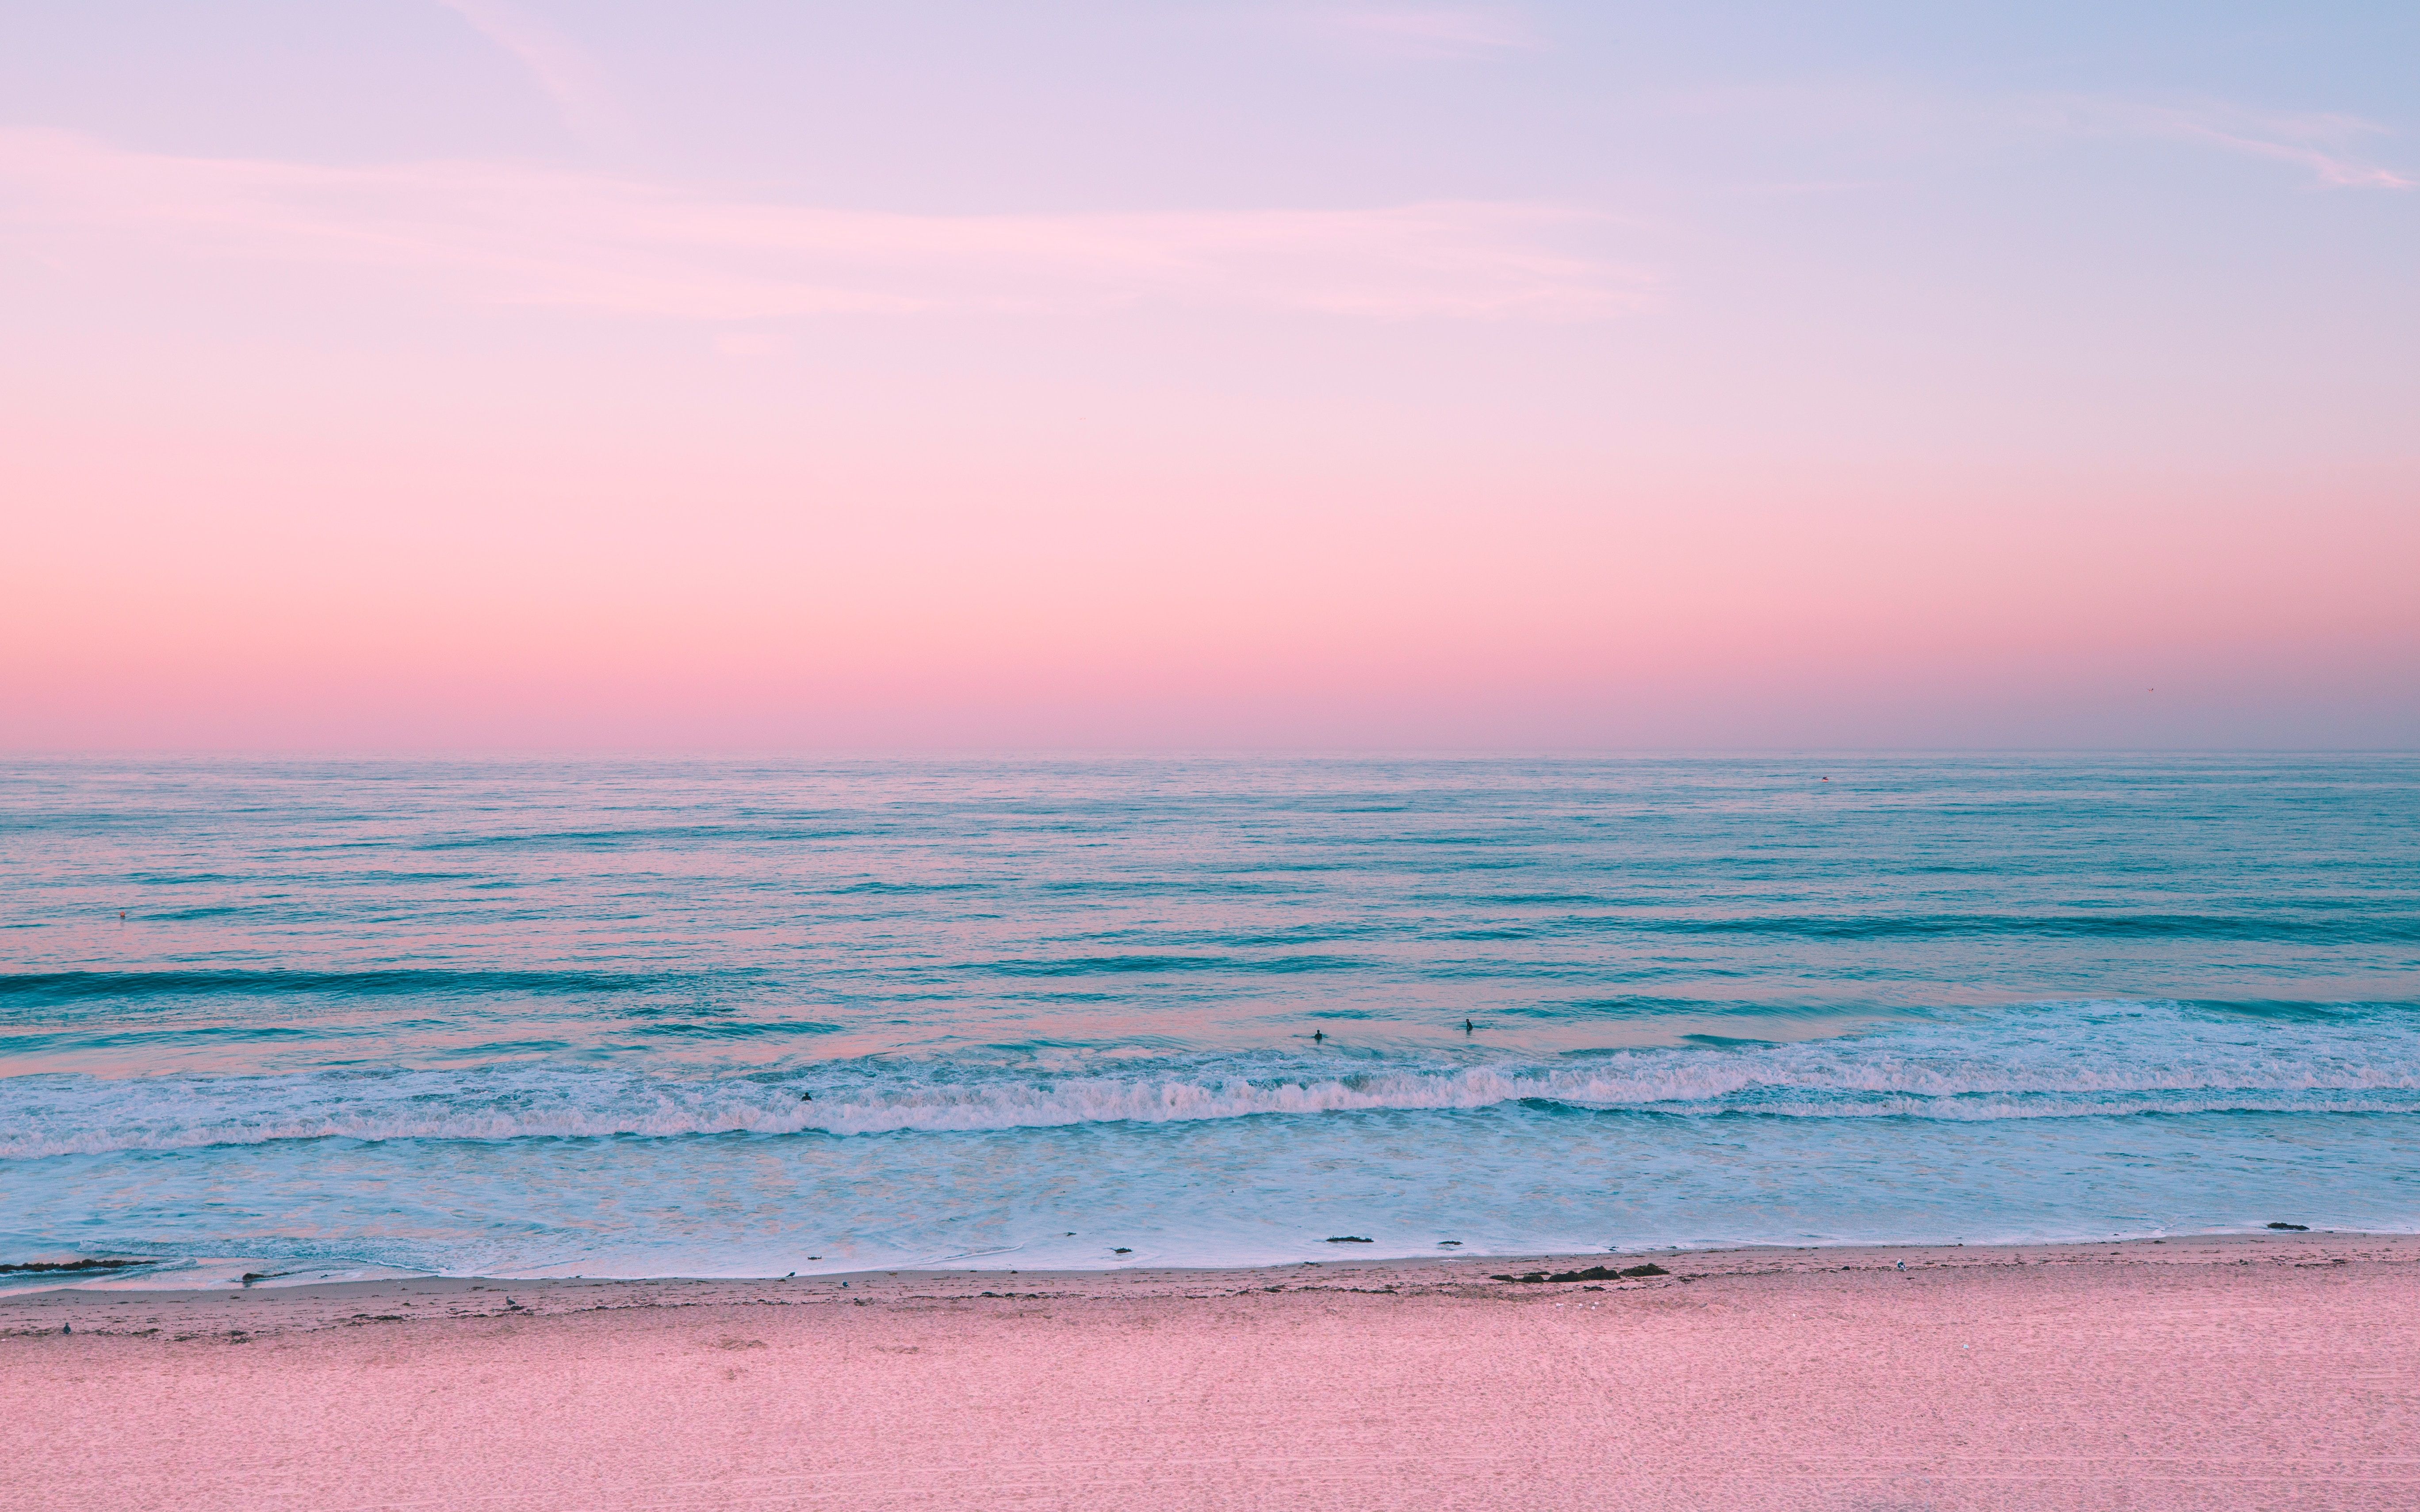 5472x3420 #wave, #sea, #wafe, #dusk, #pastel, #sky, #californium, #beach, #Public domain image, #horizon, #sunrise, #pink, #blue, #ocean, #sand, #landscape, #peaceful, #dawn. Mocah.org HD Desktop Wallpaper